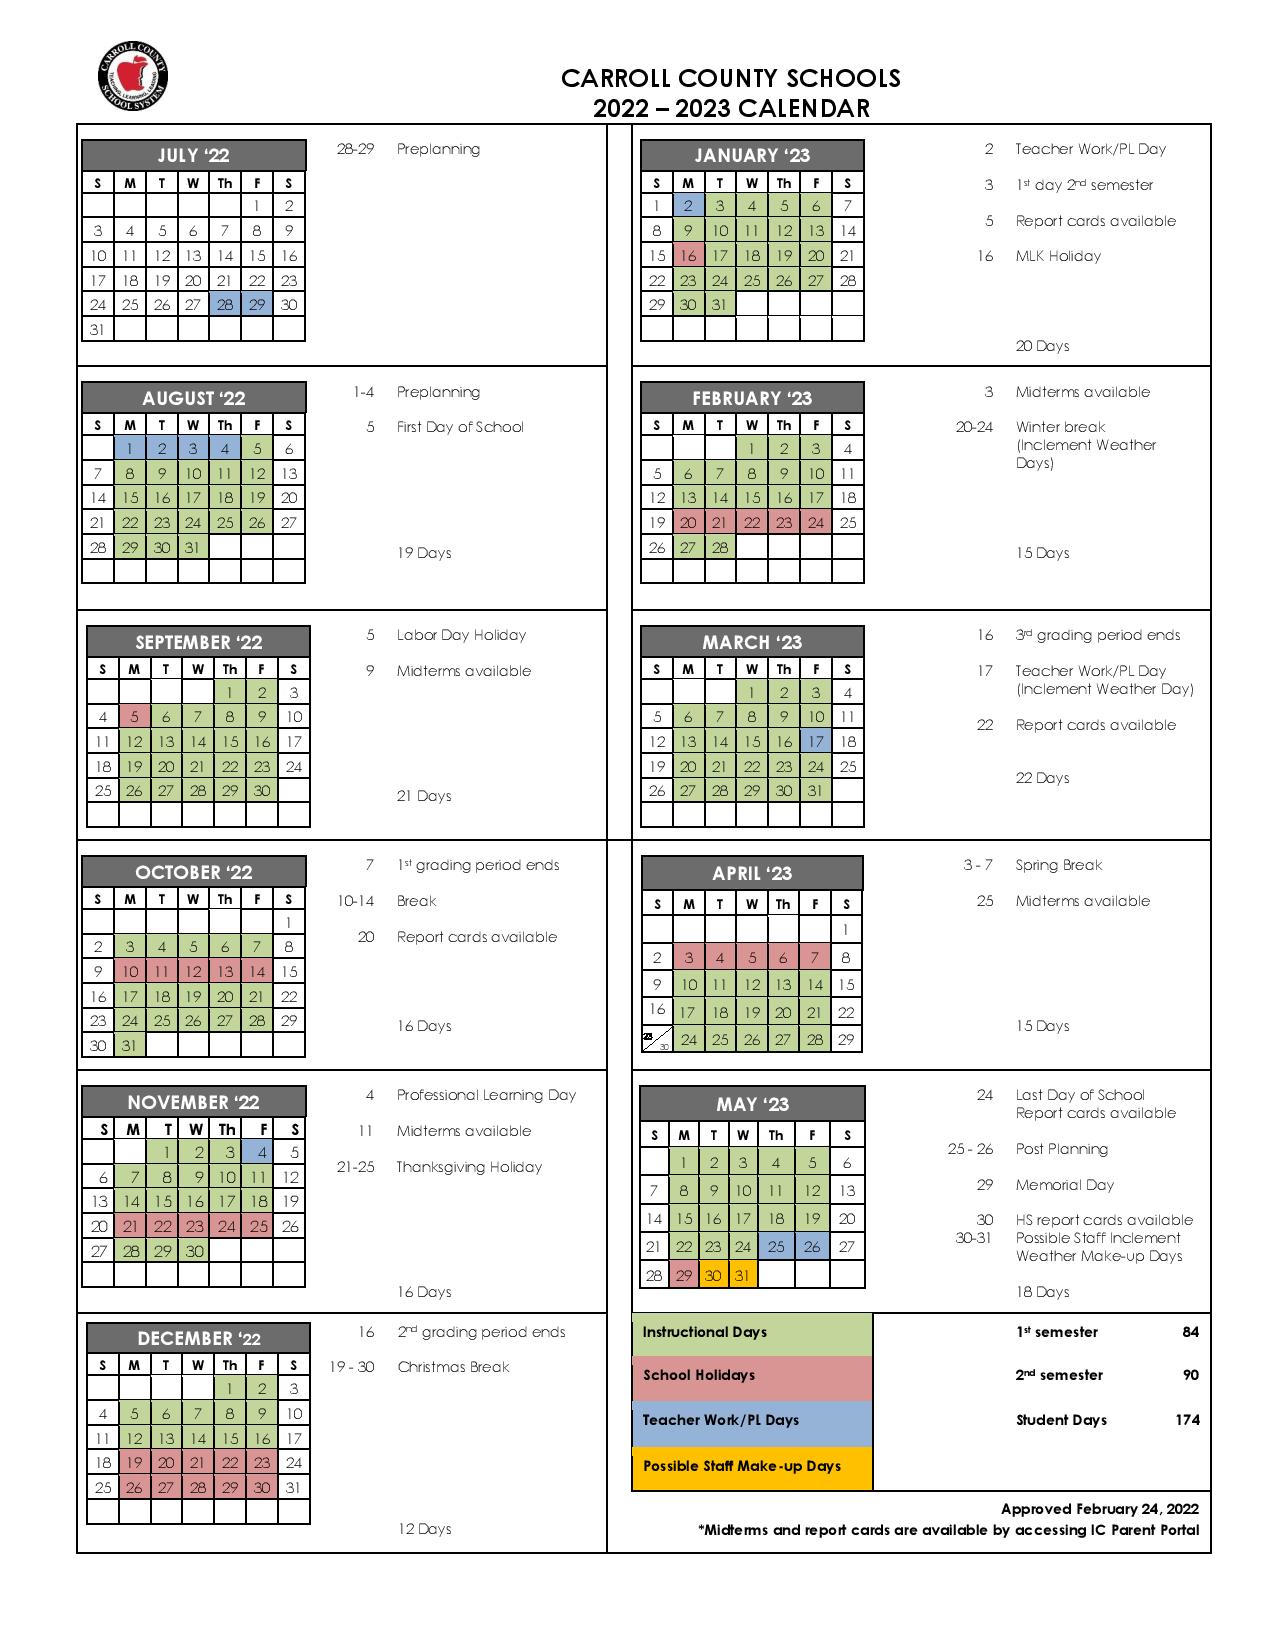 Carroll County Schools Calendar 2022-2023 in PDF